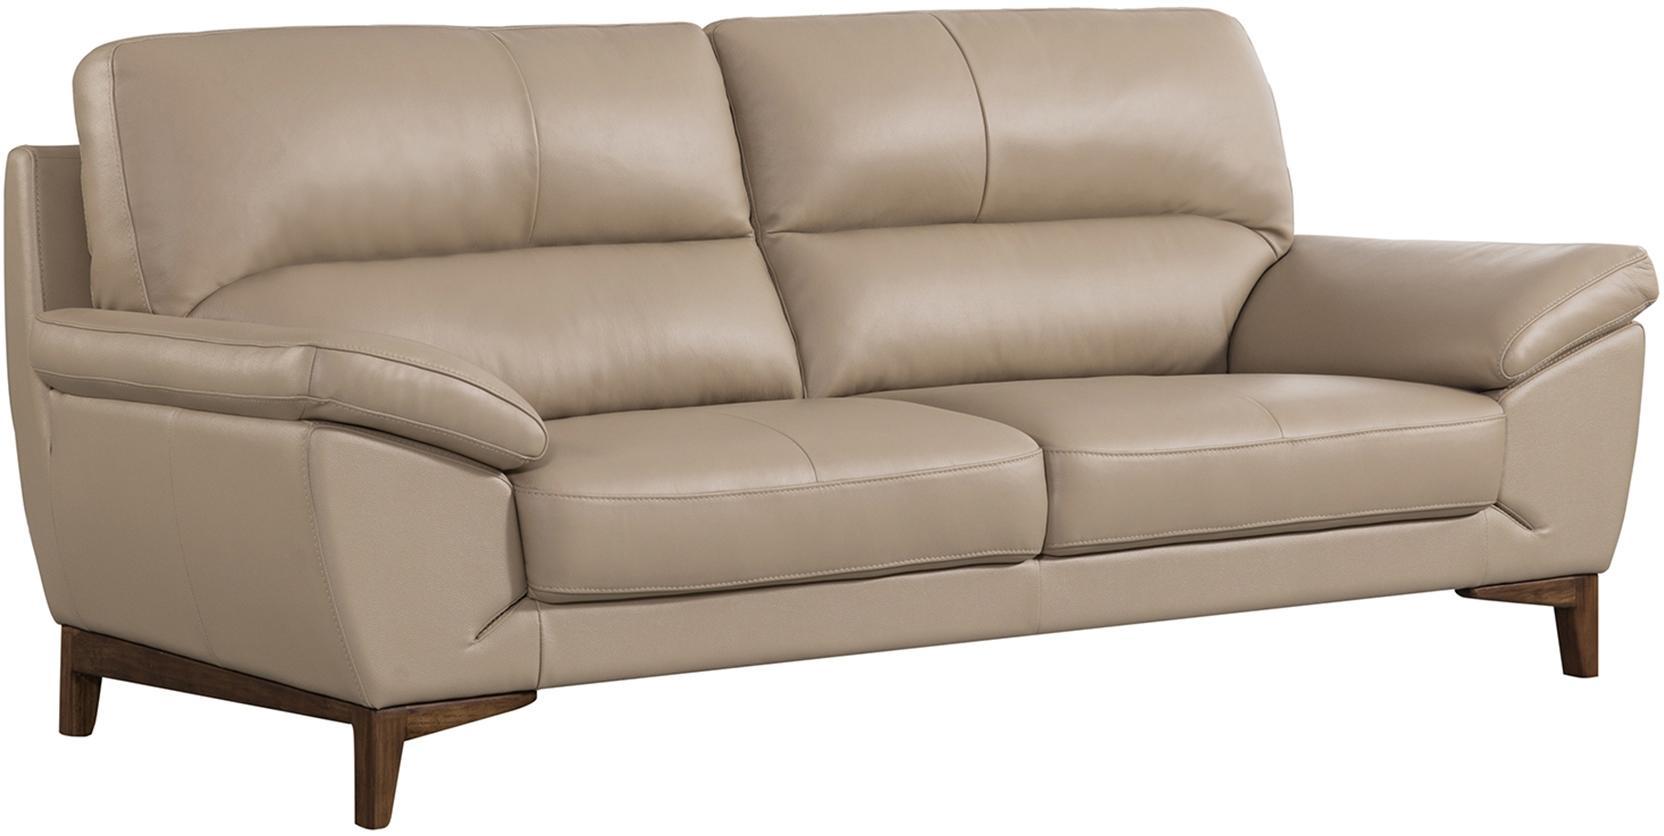 Tan Top Grain Italian Leather Sofa Set 3 Pcs EK080-TAN American Eagle ...